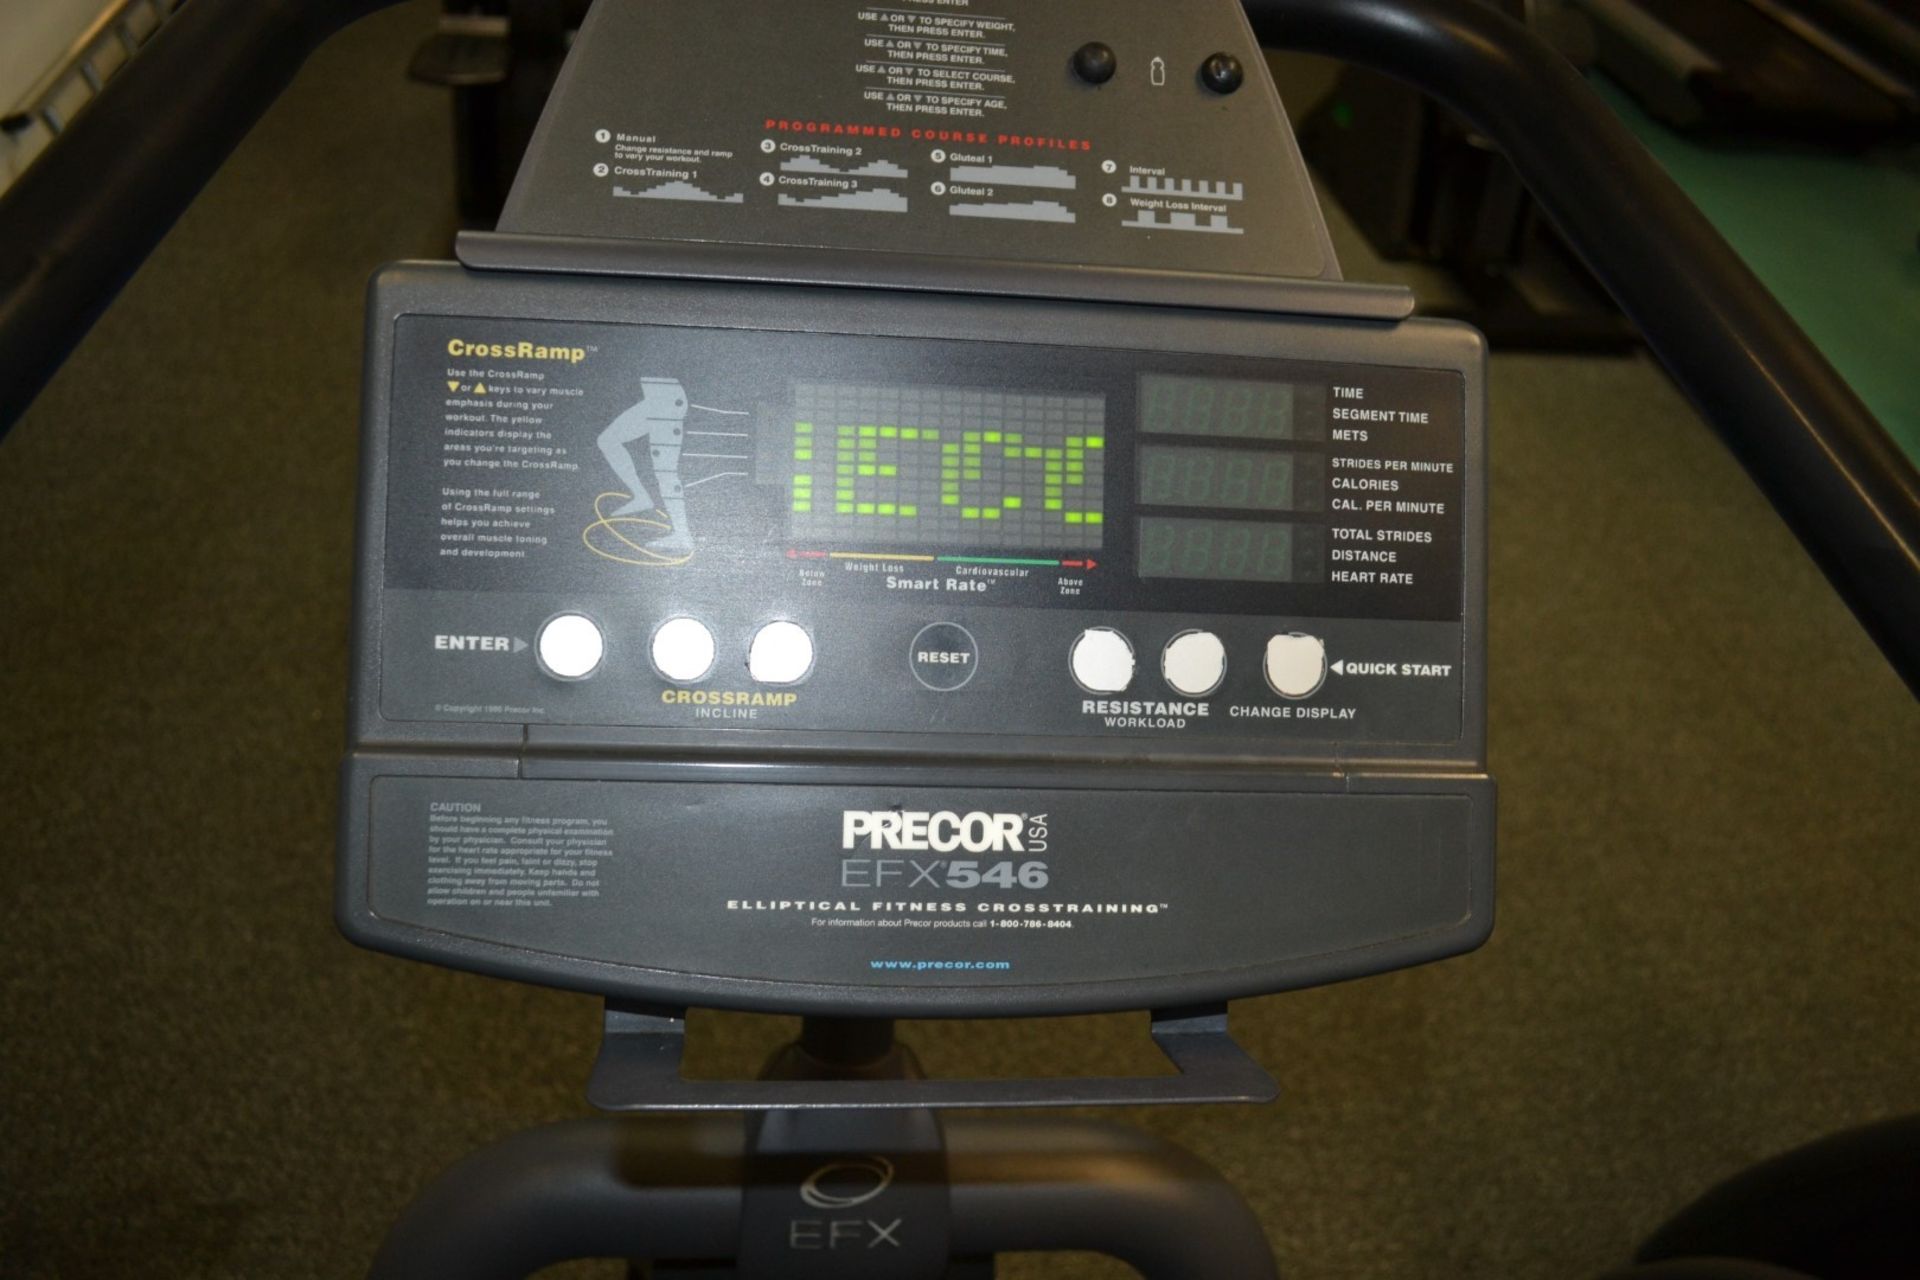 1 x Precor EFX 546 Cross-Trainer Gym Machine - Dimensions: L200 x W90 x H155cm - Ref: J2039/1FG - - Image 3 of 3